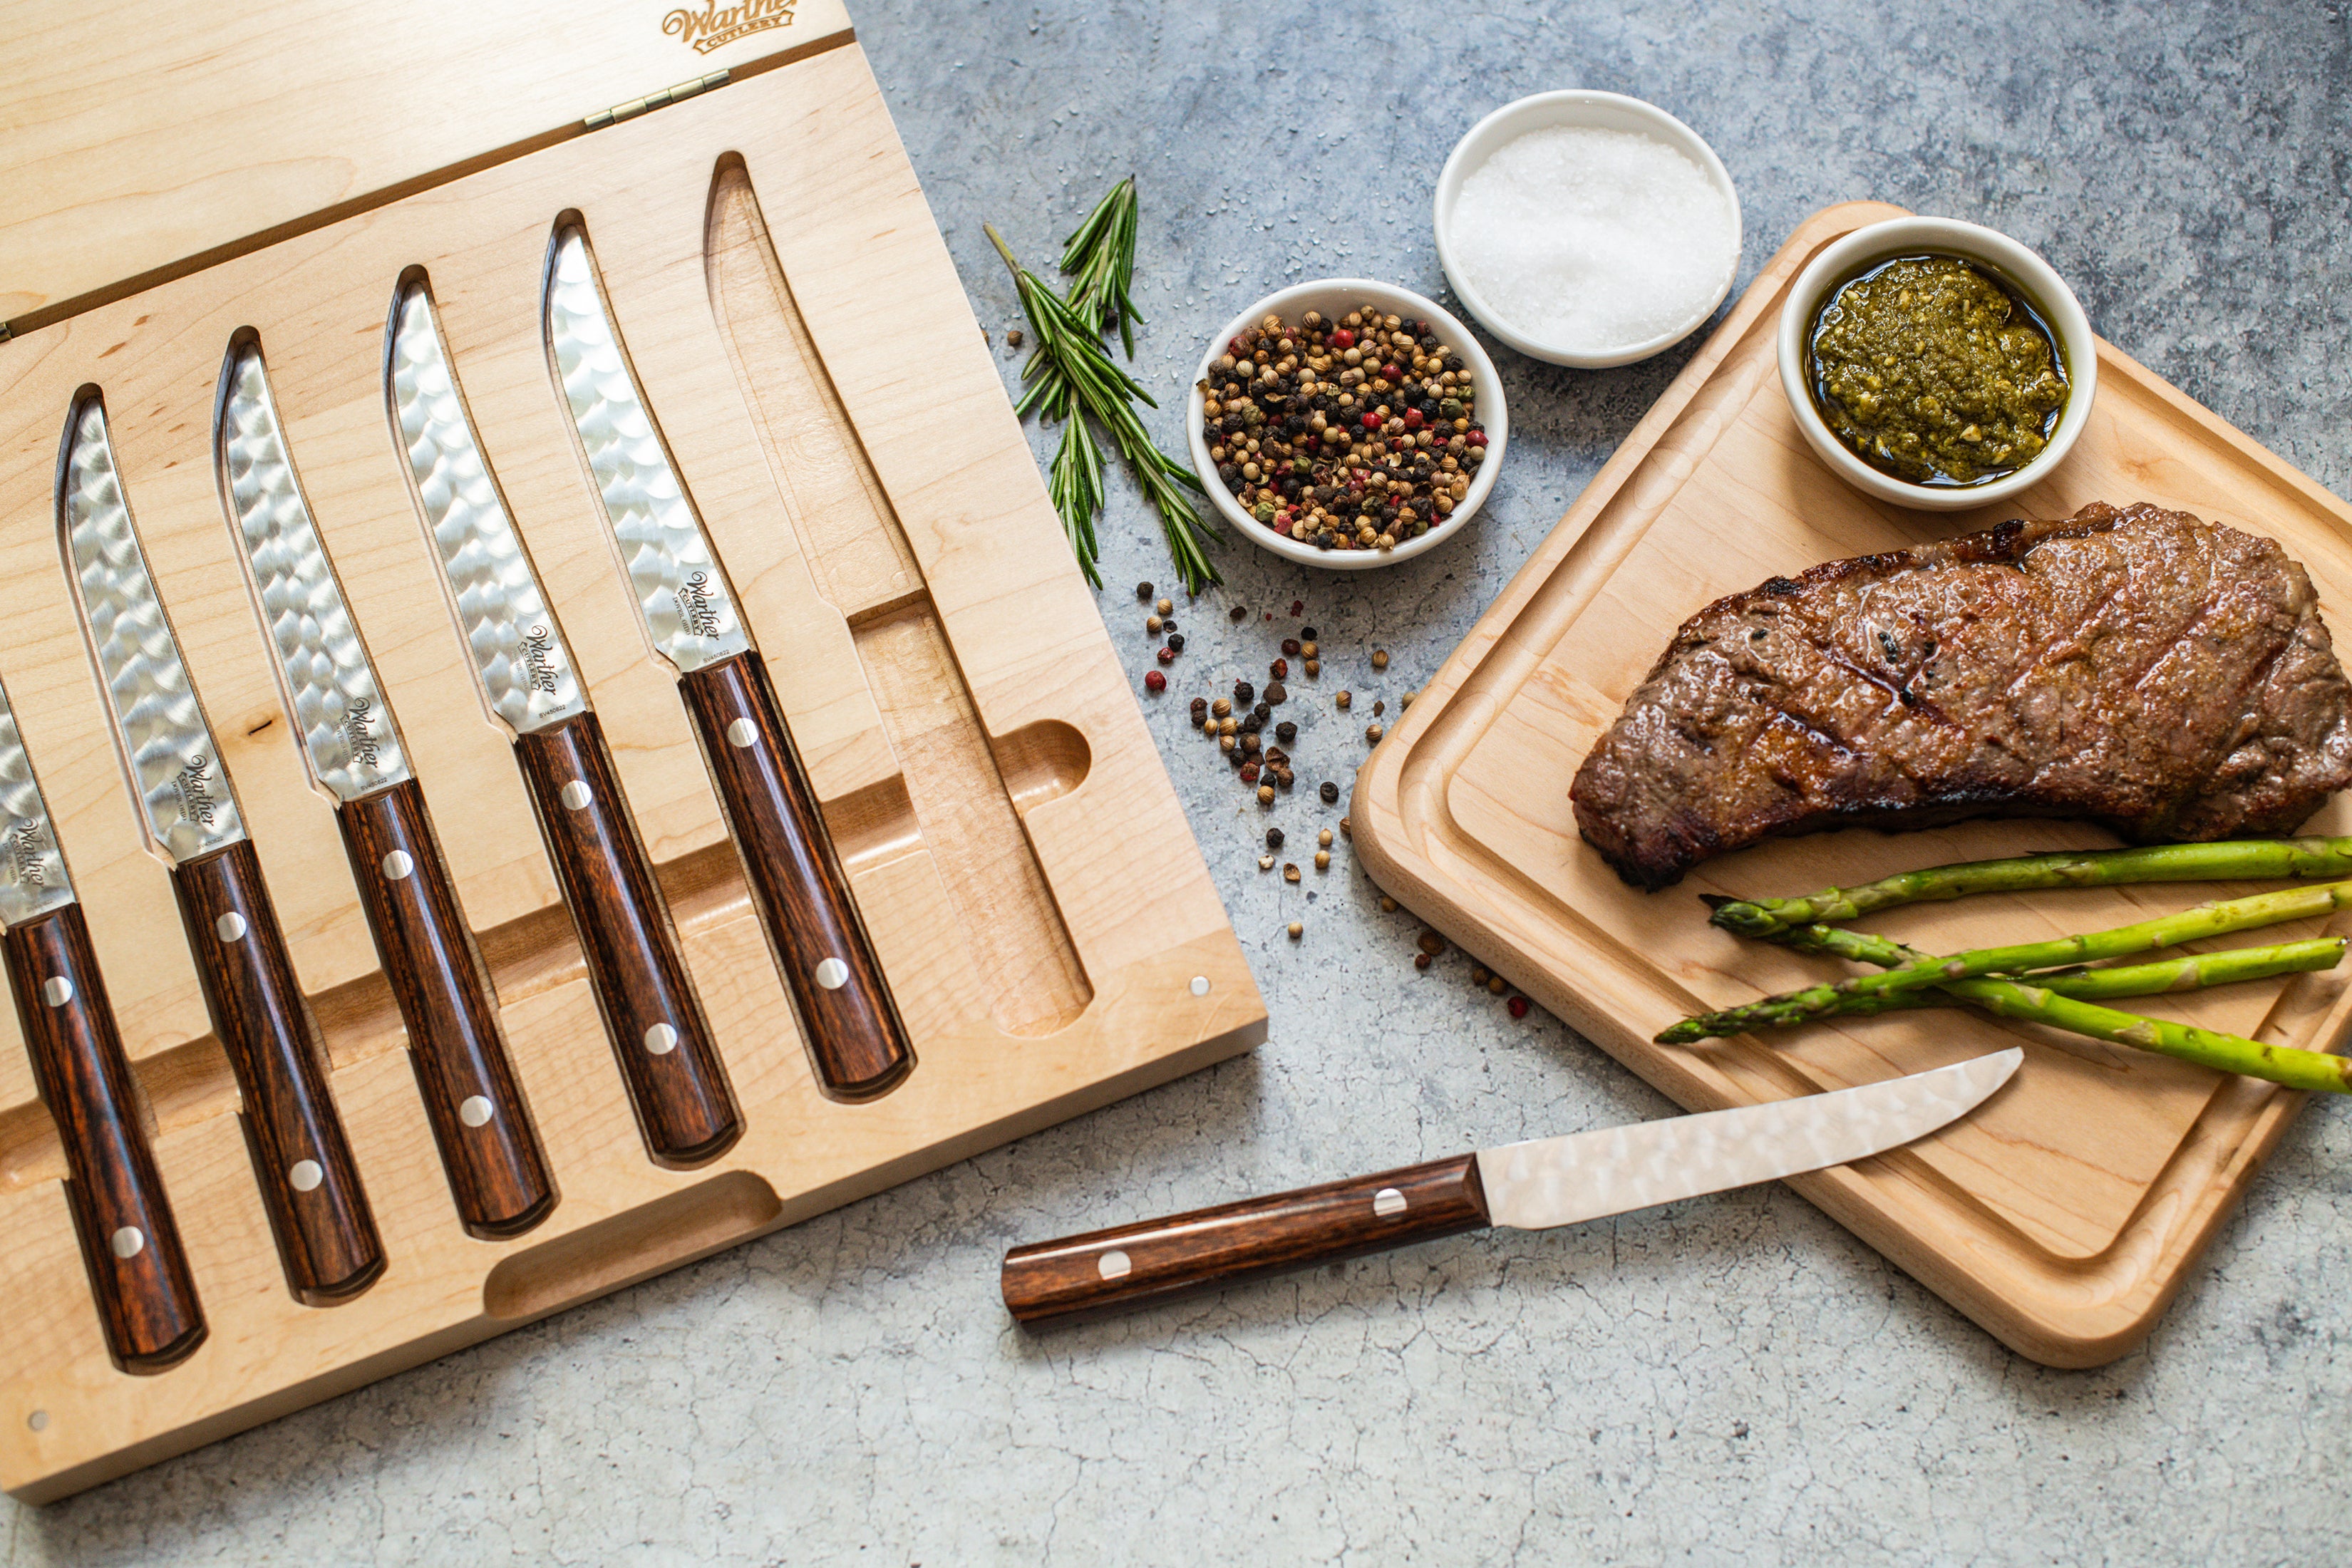 Mallory Steak Knife Sets - Liberty Tabletop